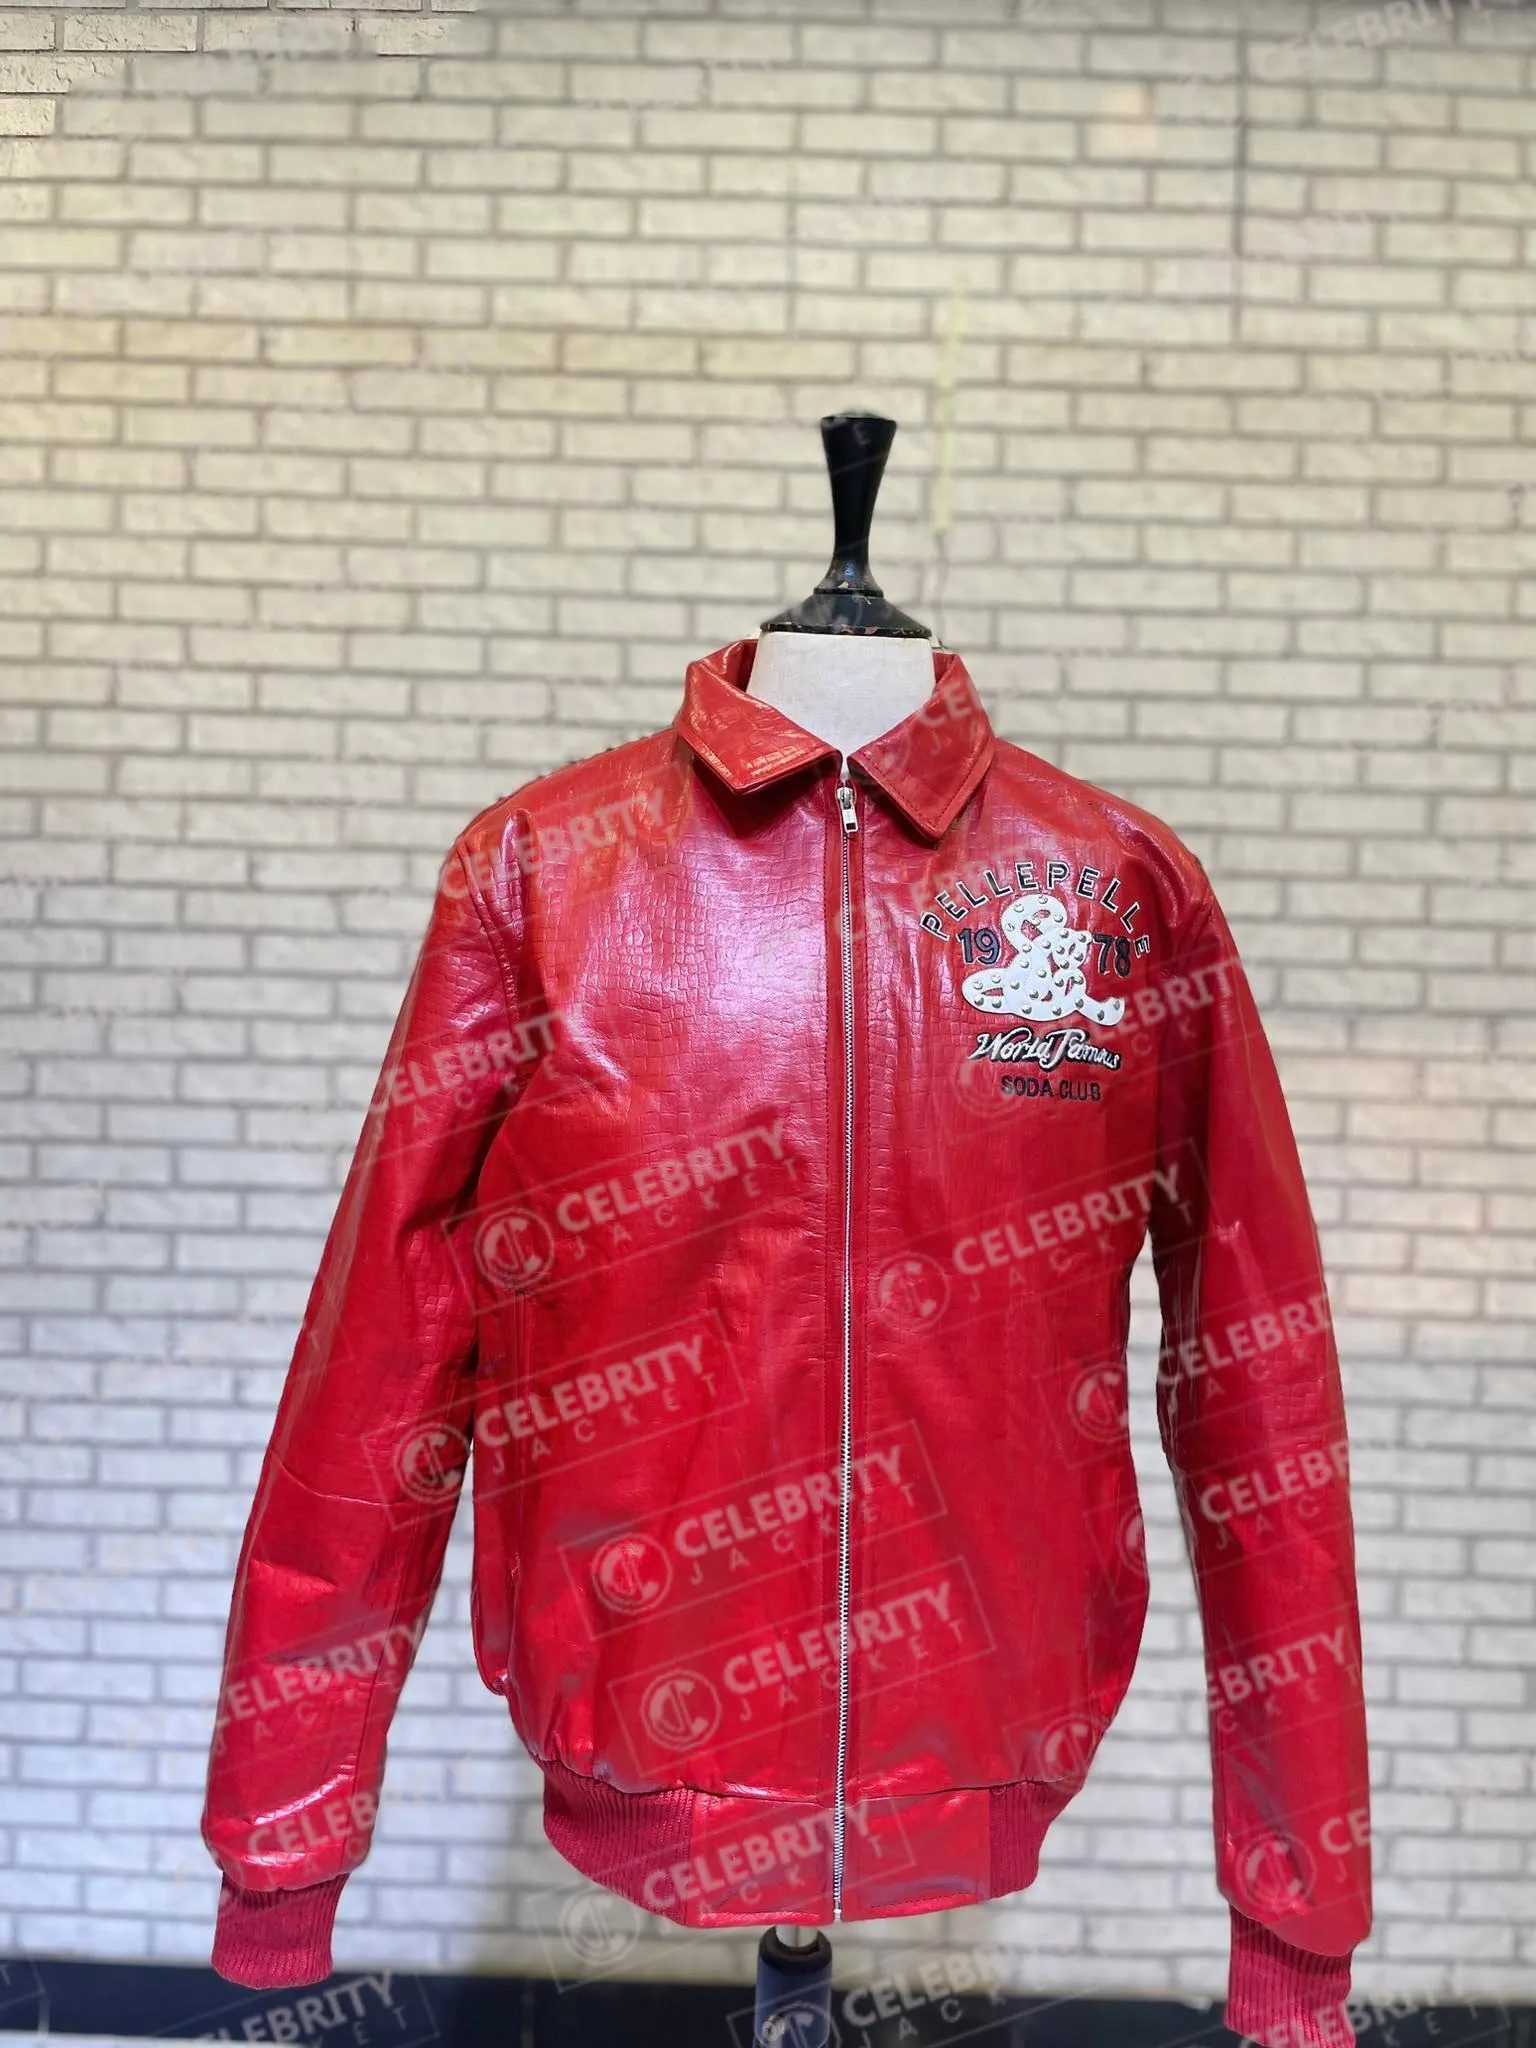 Pelle Pelle 1978 Soda Club Red Leather Jacket